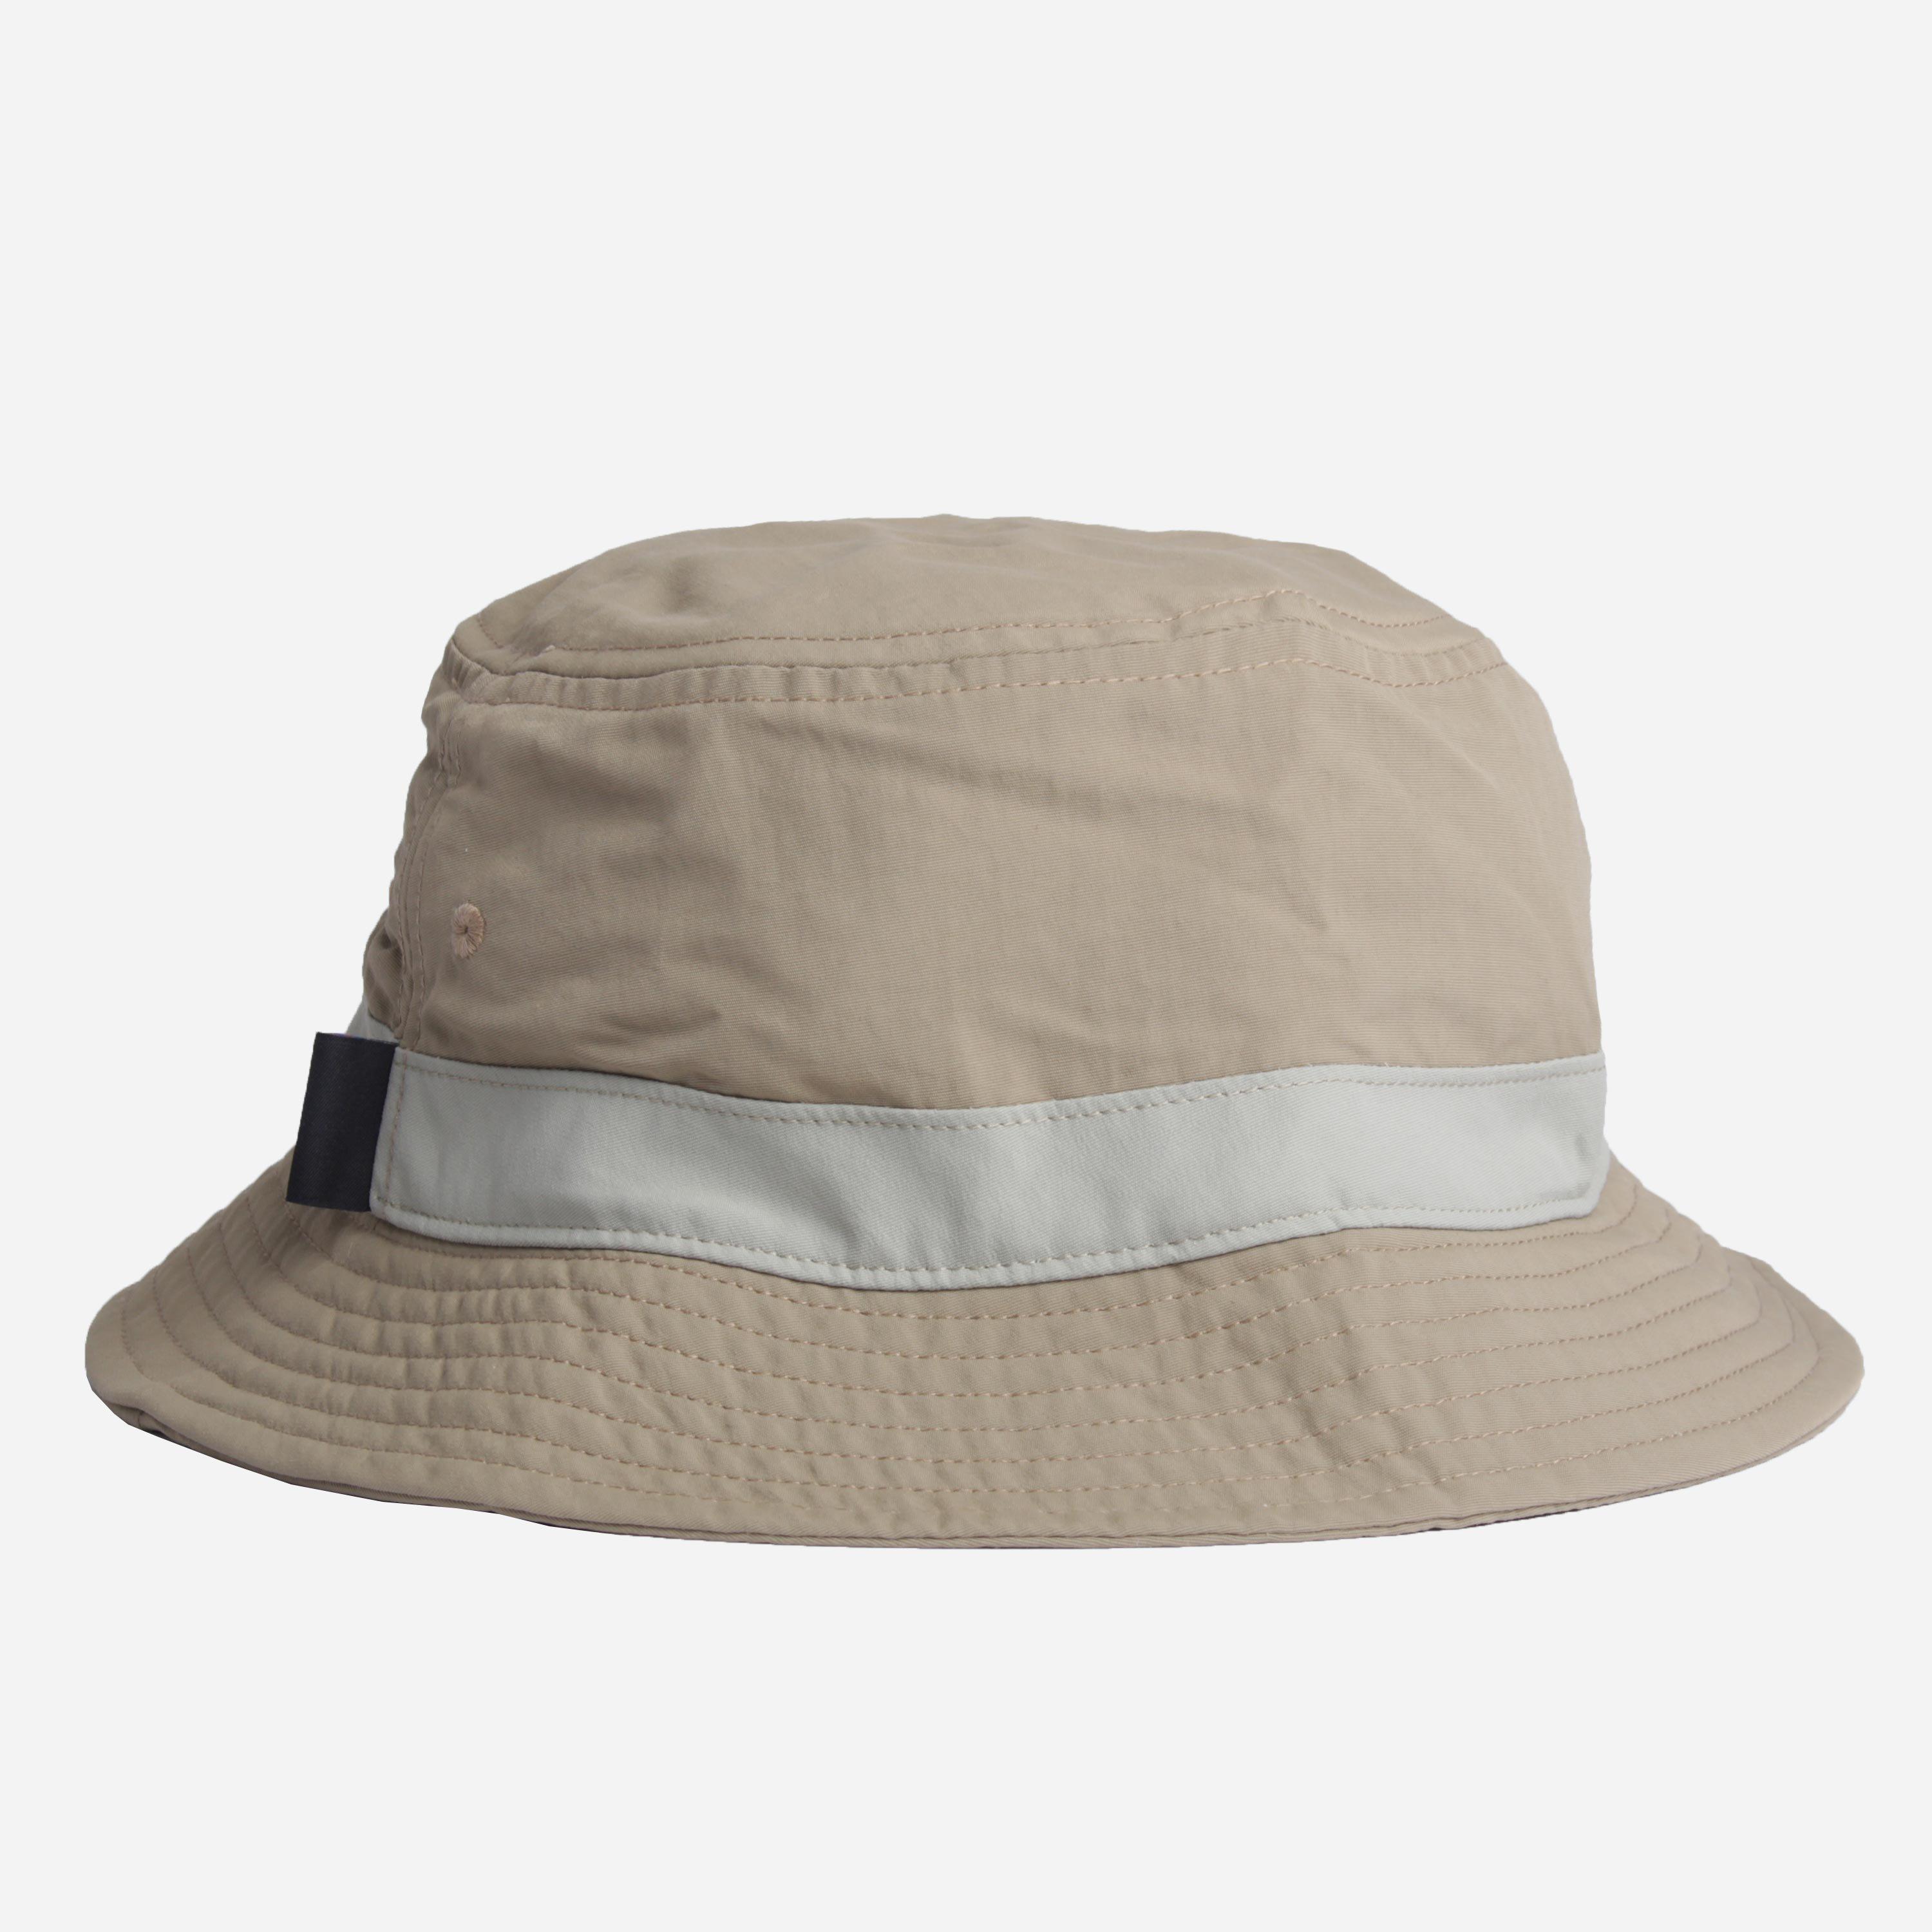 Patagonia Wavefarer Bucket Hat in Natural for Men - Lyst